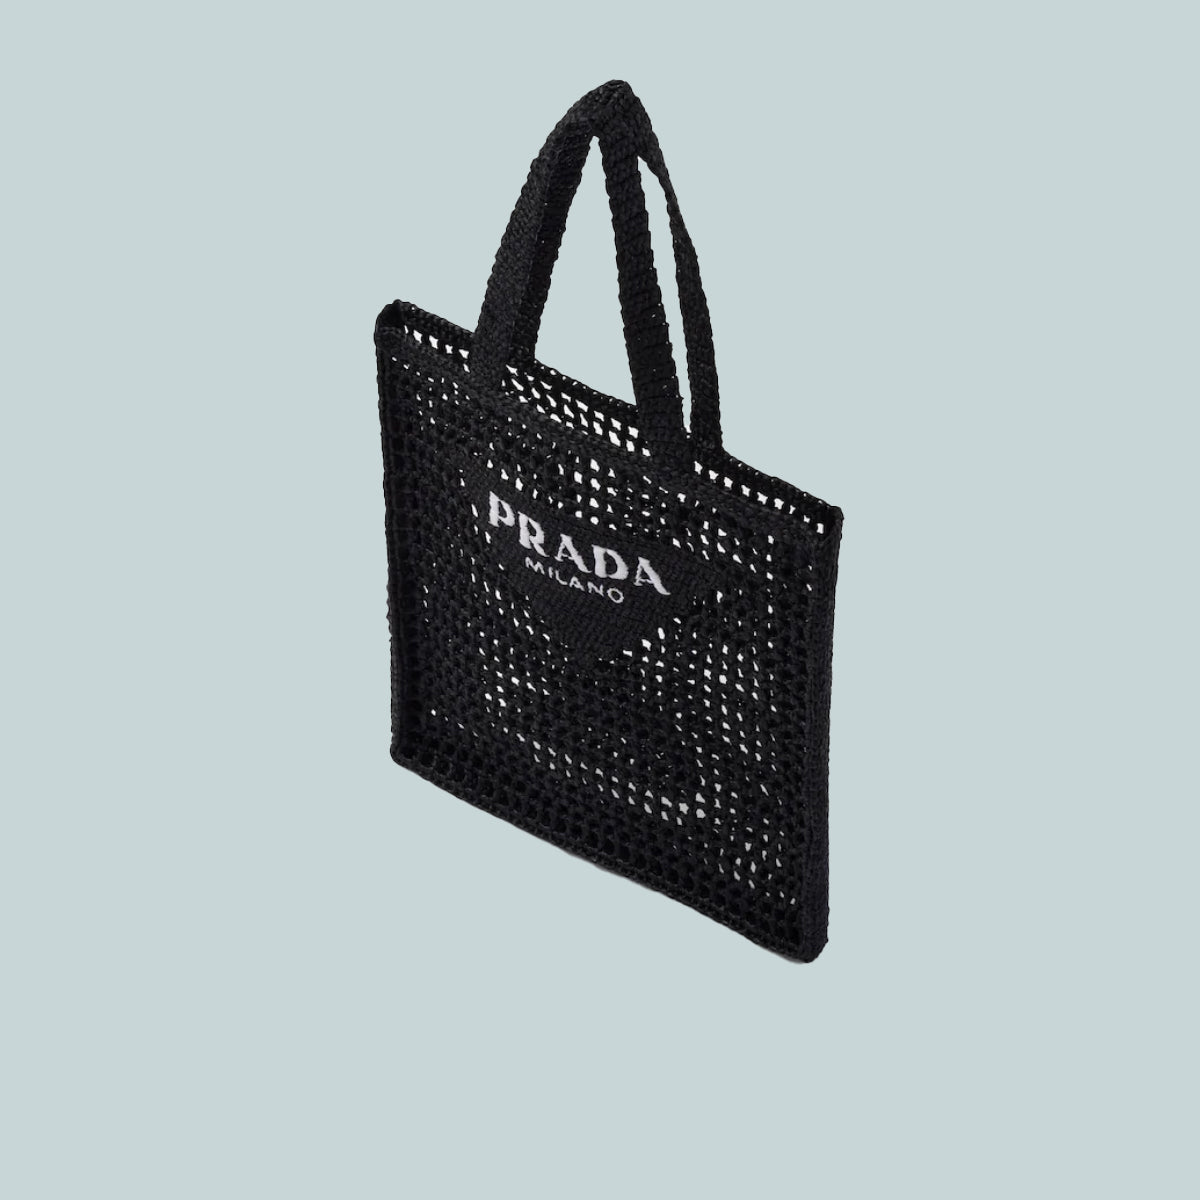 Crochet tote bag with logo black